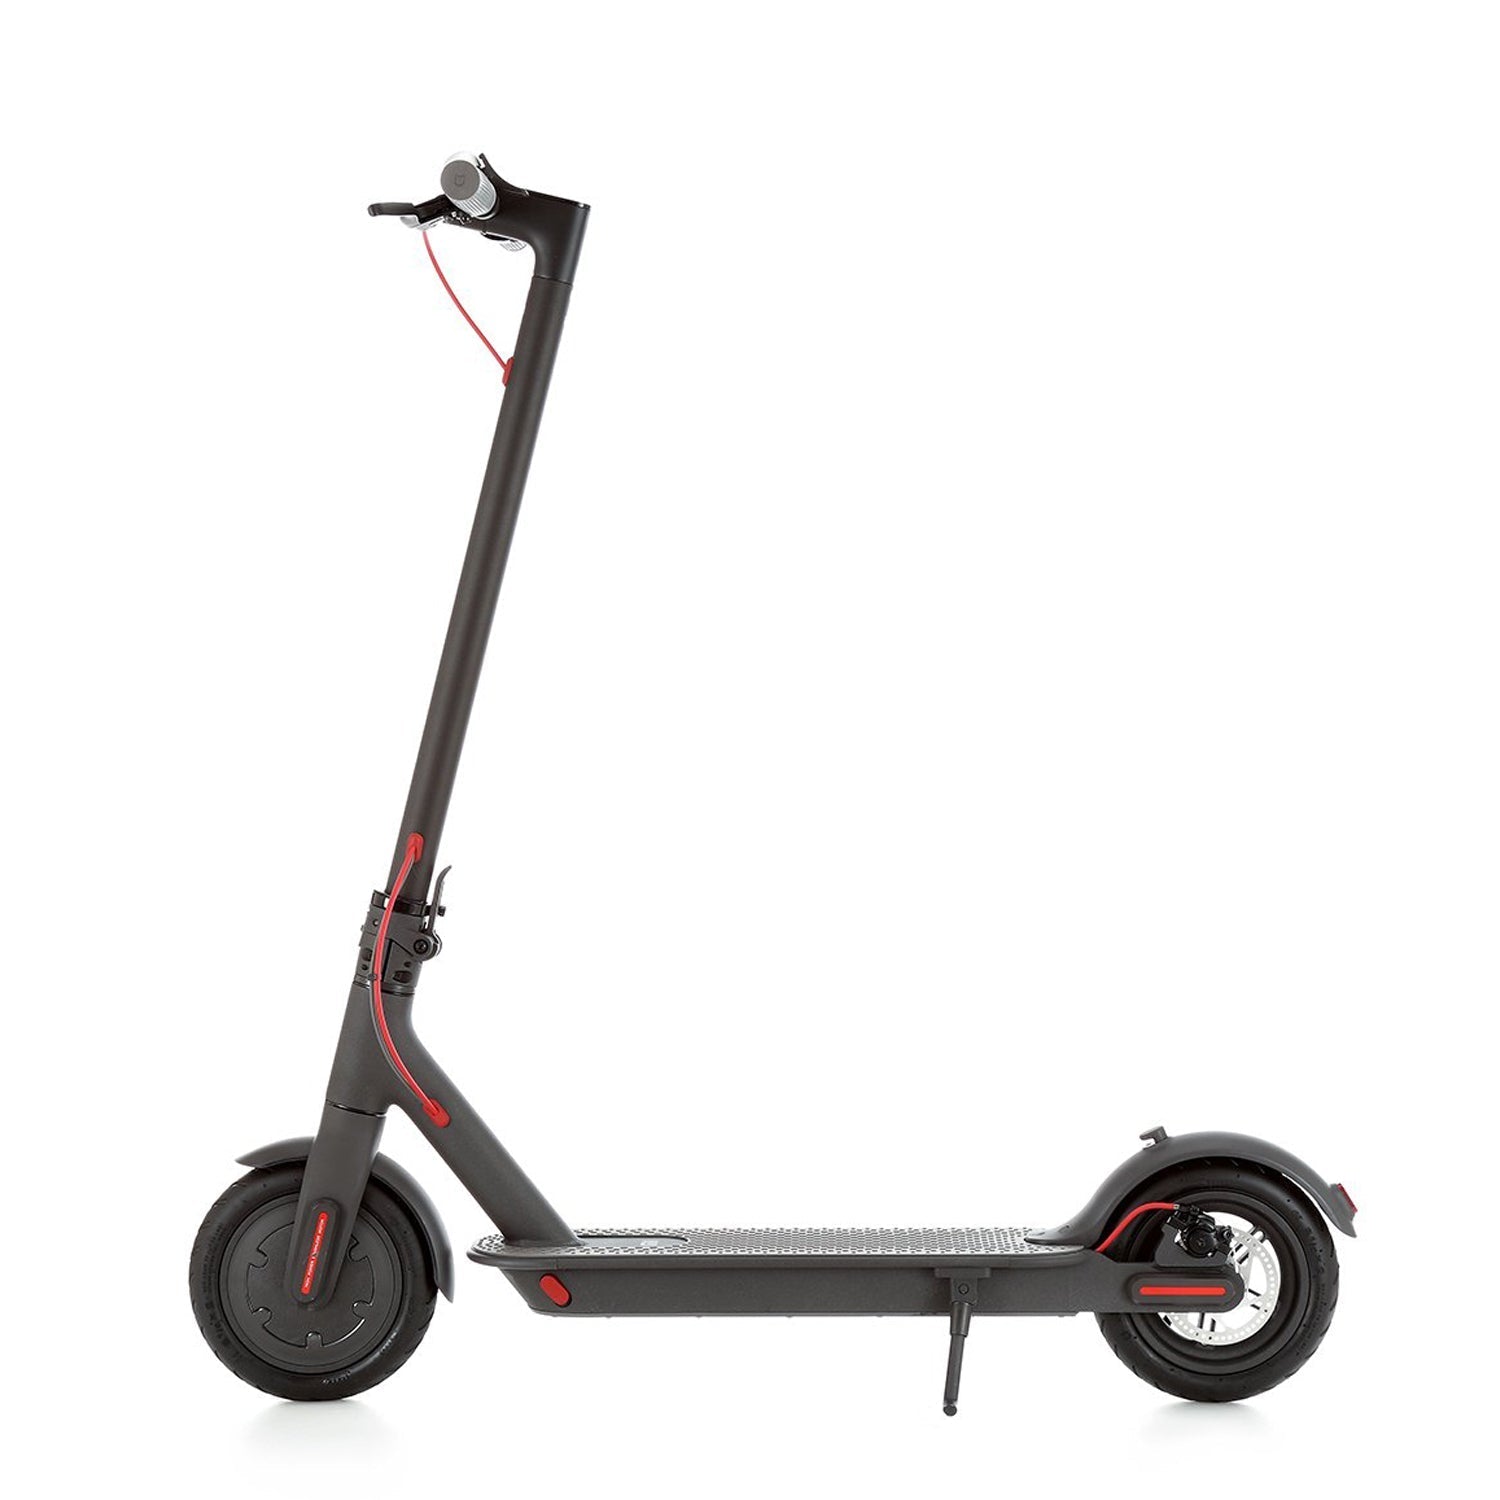 EU Warehouse No Tax Free  Dropshipping 8.5 Inch 350W 36V D8 PRO Big Wheel Foldable Electric Scooter baby magazin 